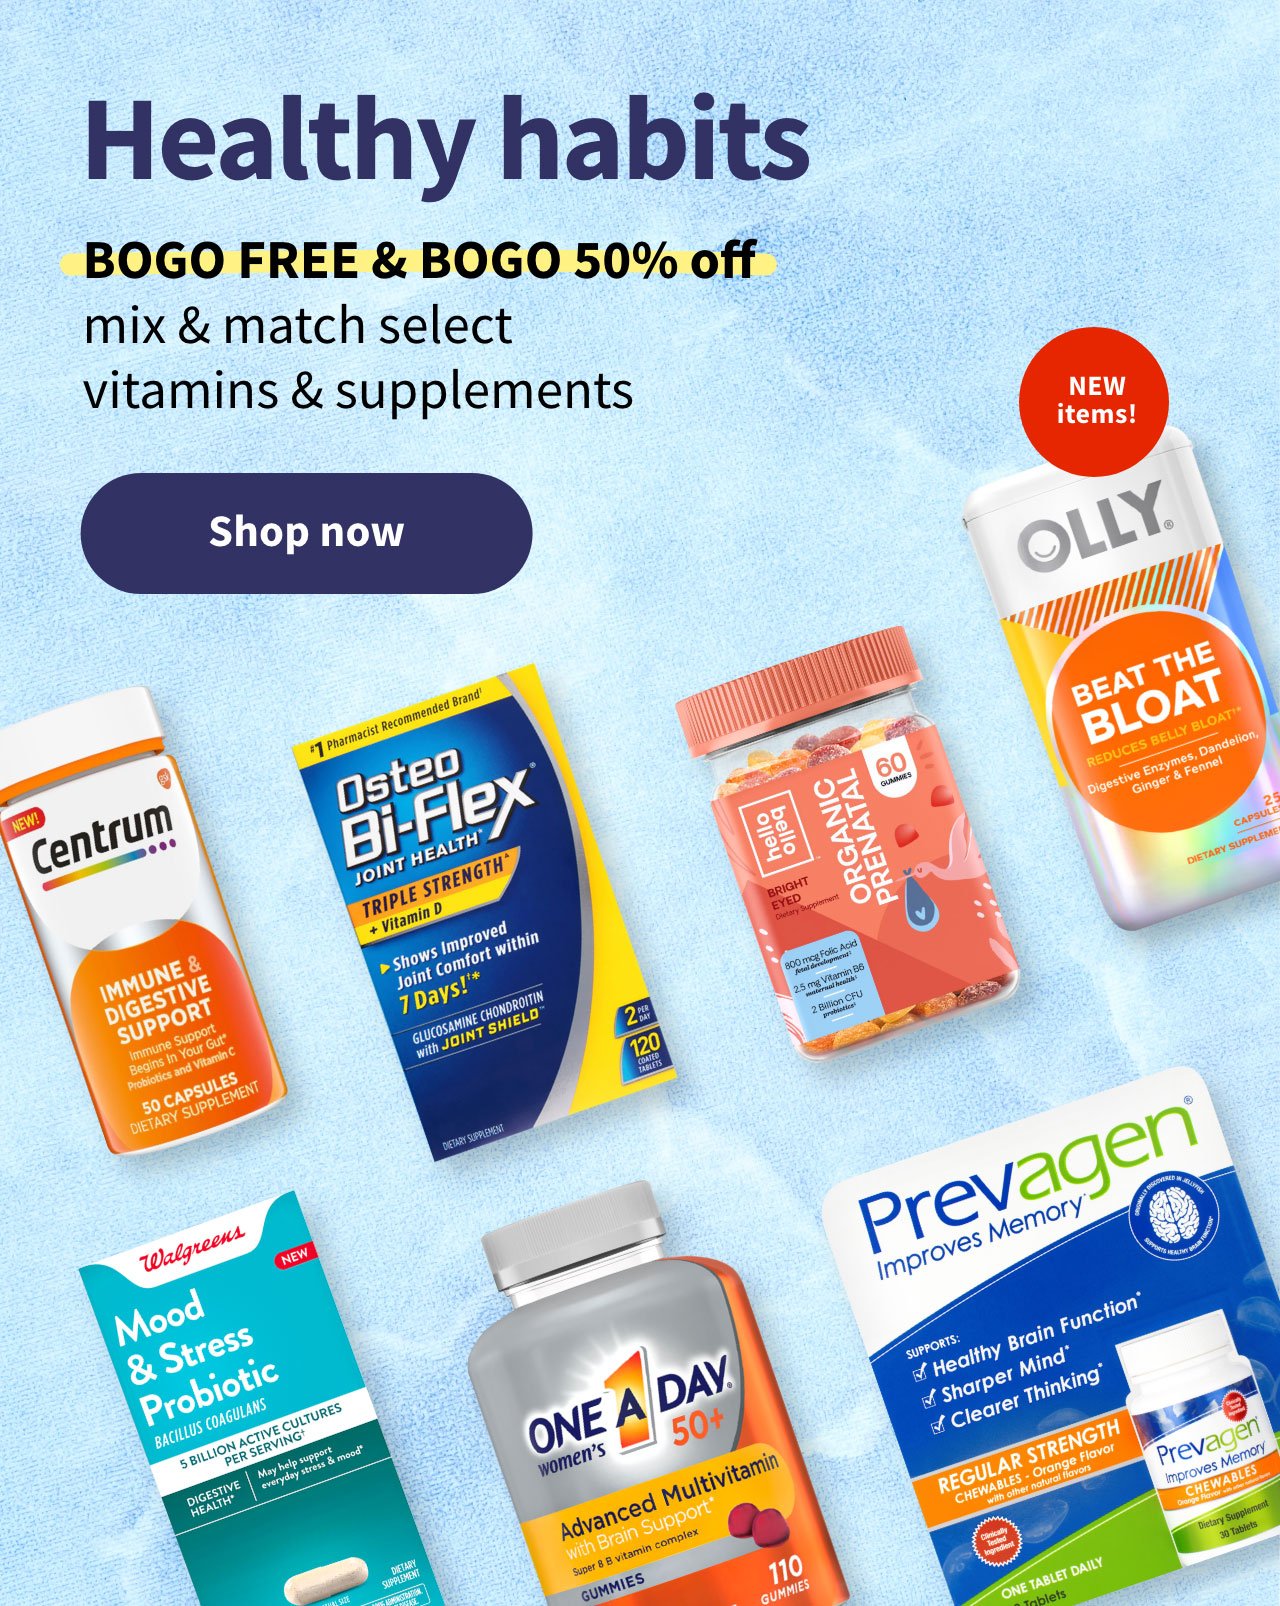 Healthy habits. BOGO FREE & BOGO 50% off mix & match select vitamins & supplements. Shop now.